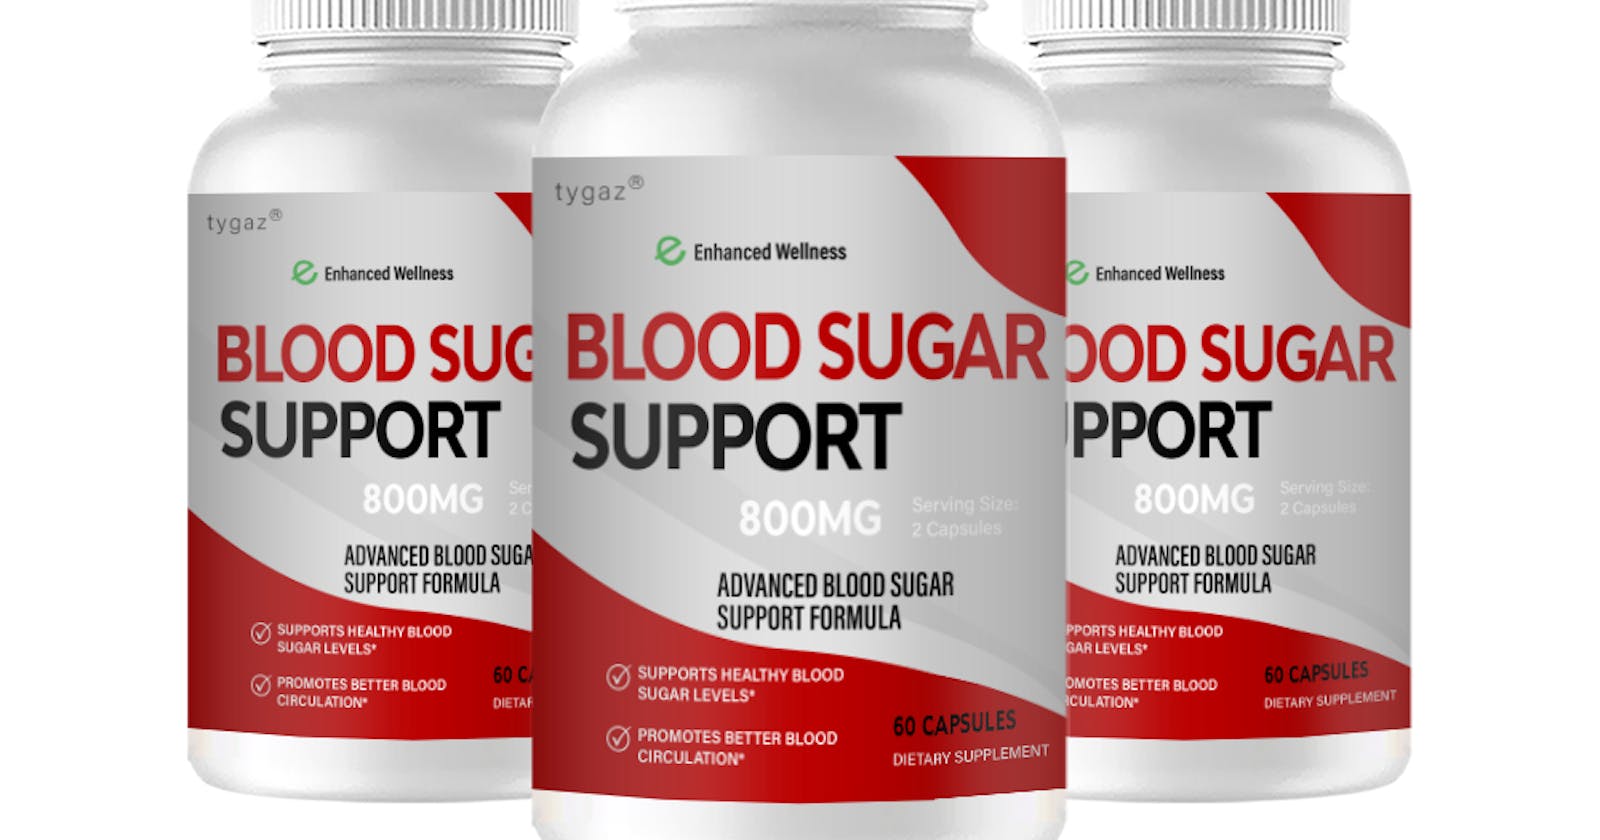 Enhanced Wellness Blood Sugar Its Scam or Worth the Money?